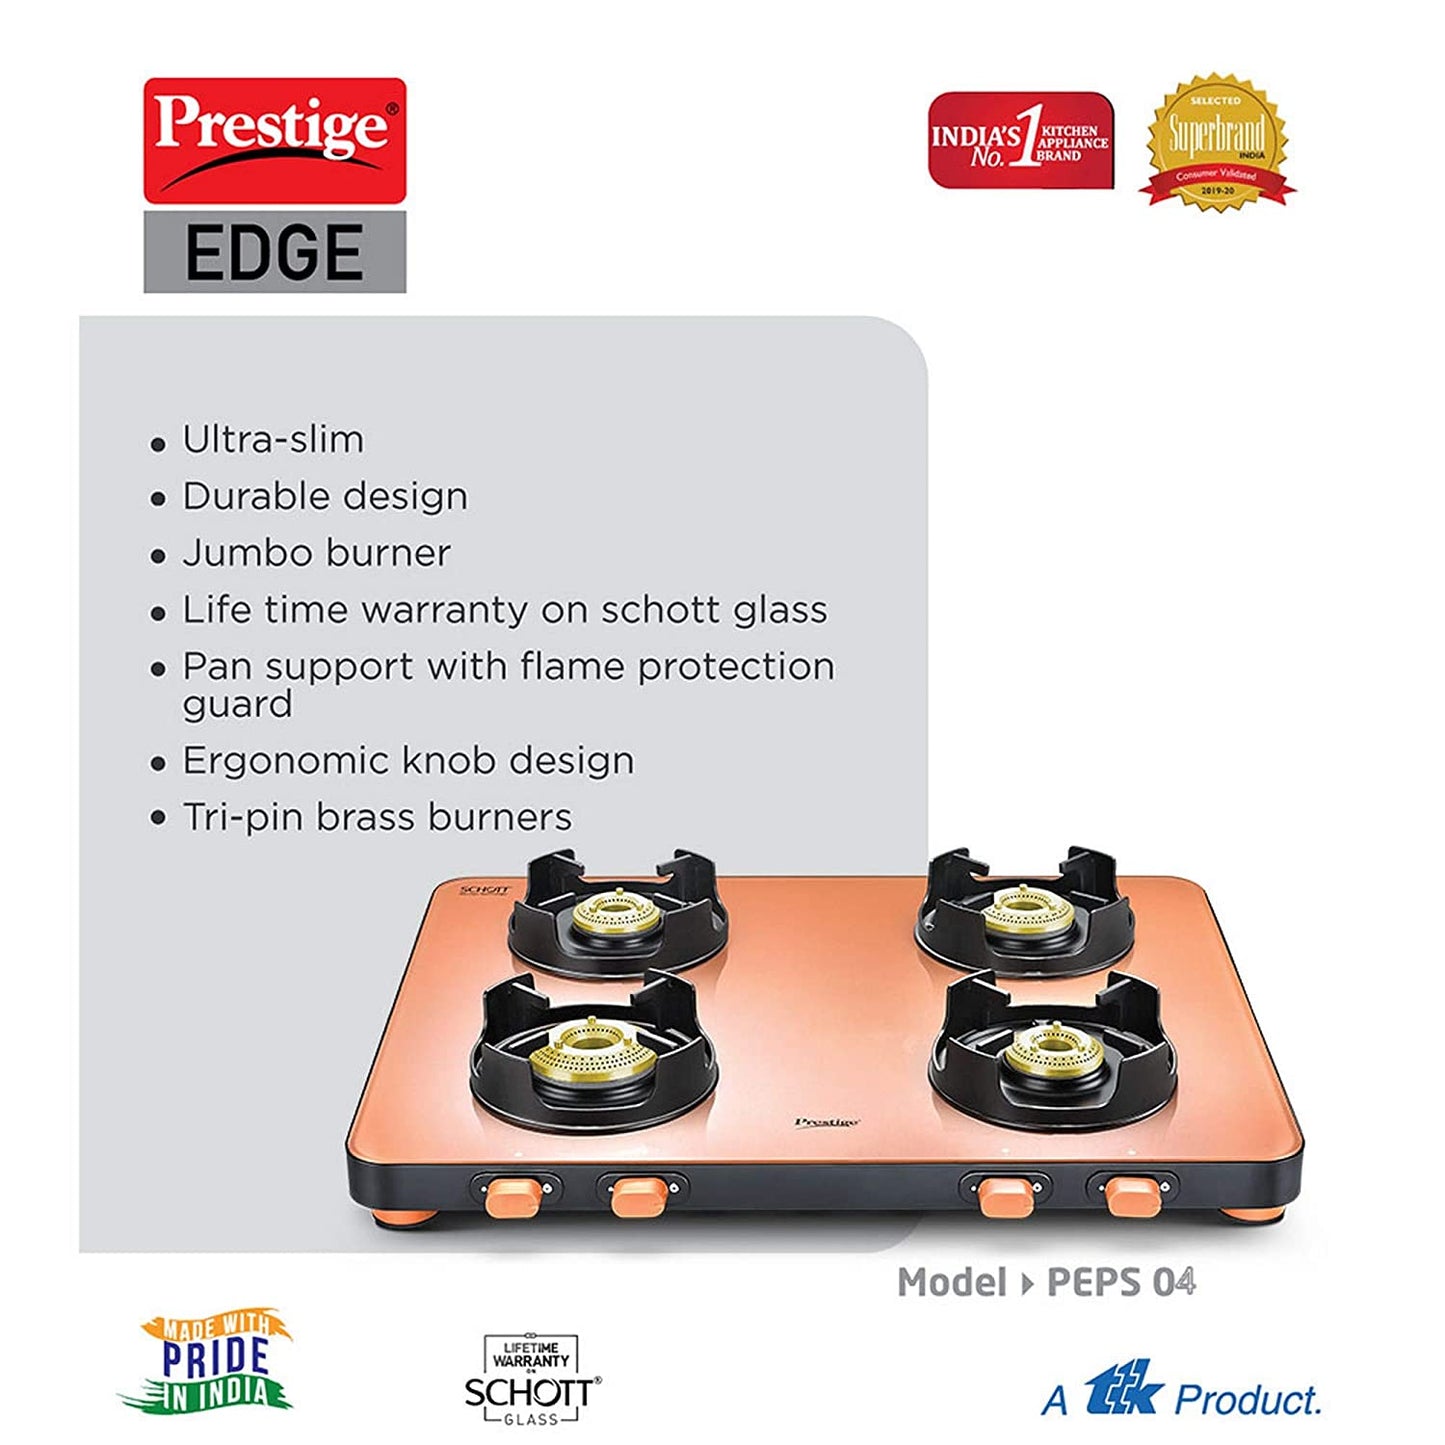 Prestige Edge PEPS 04 Schott Glass Top Gas Stove, 4 Burner